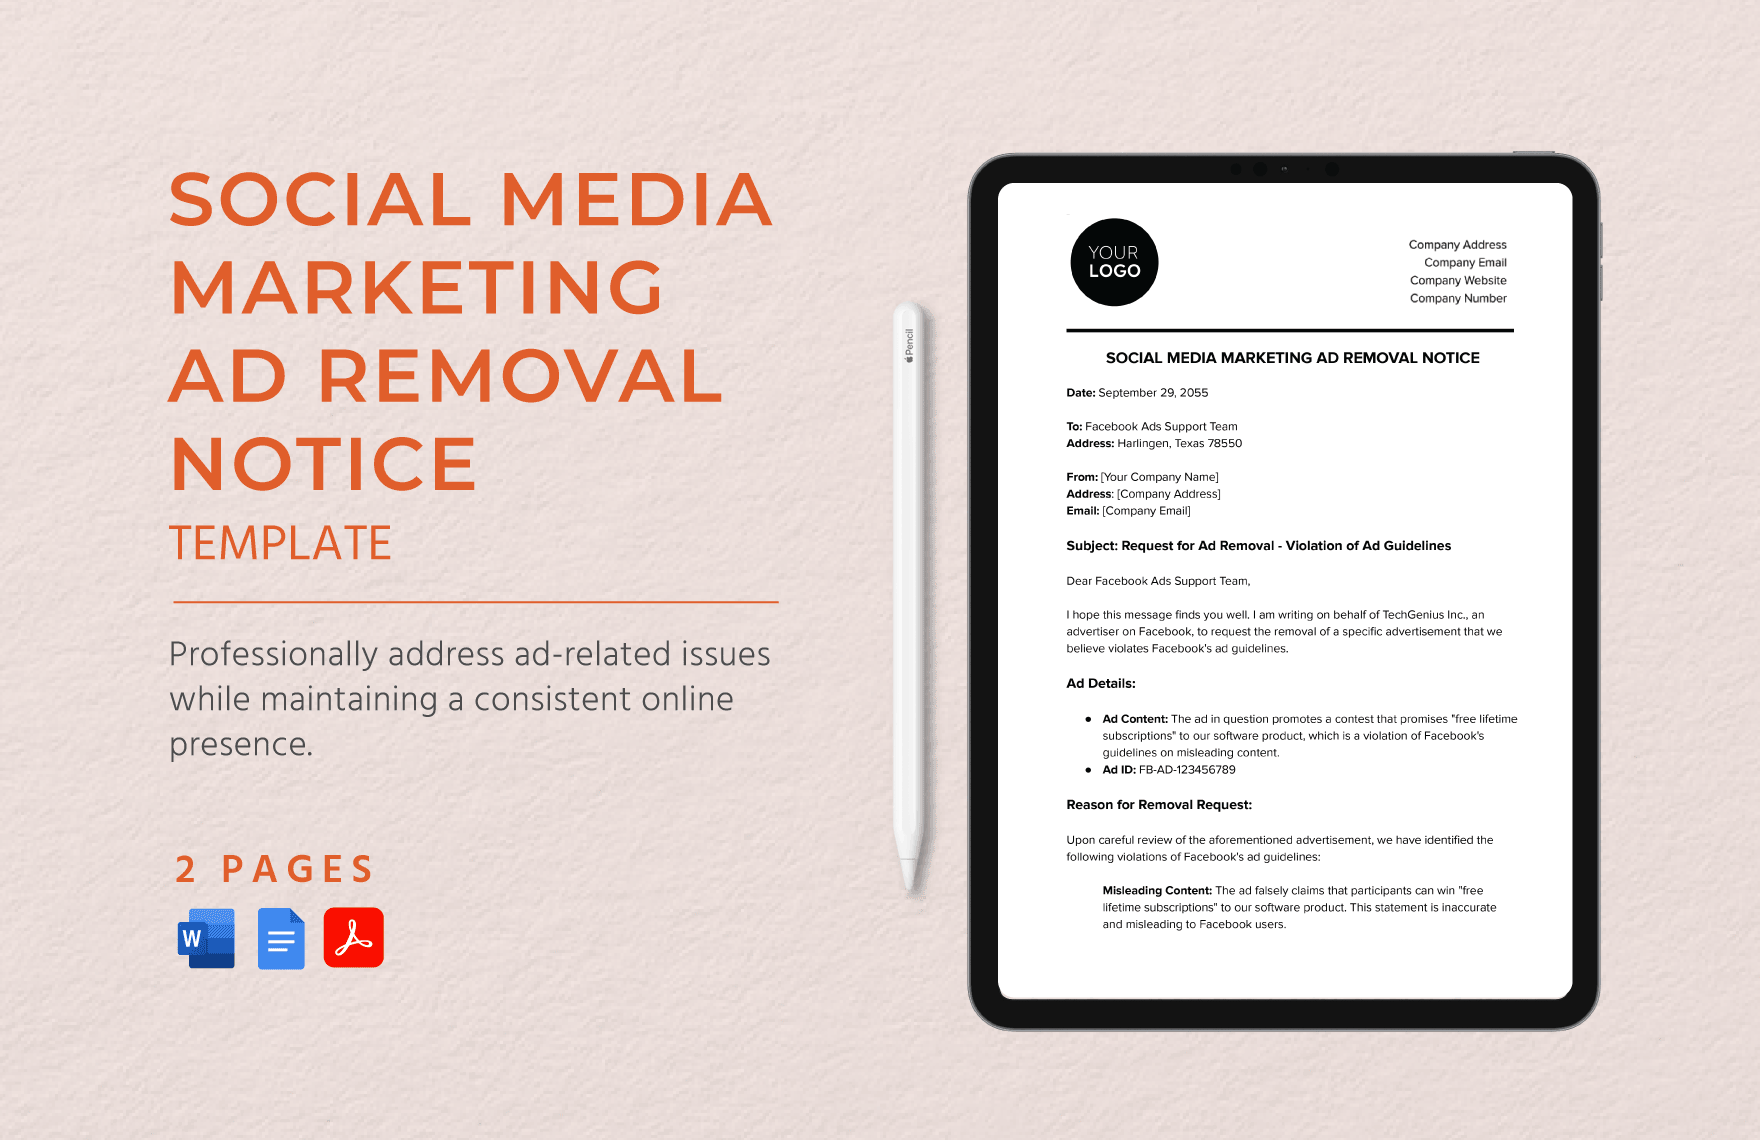 Social Media Marketing Ad Removal Notice Template